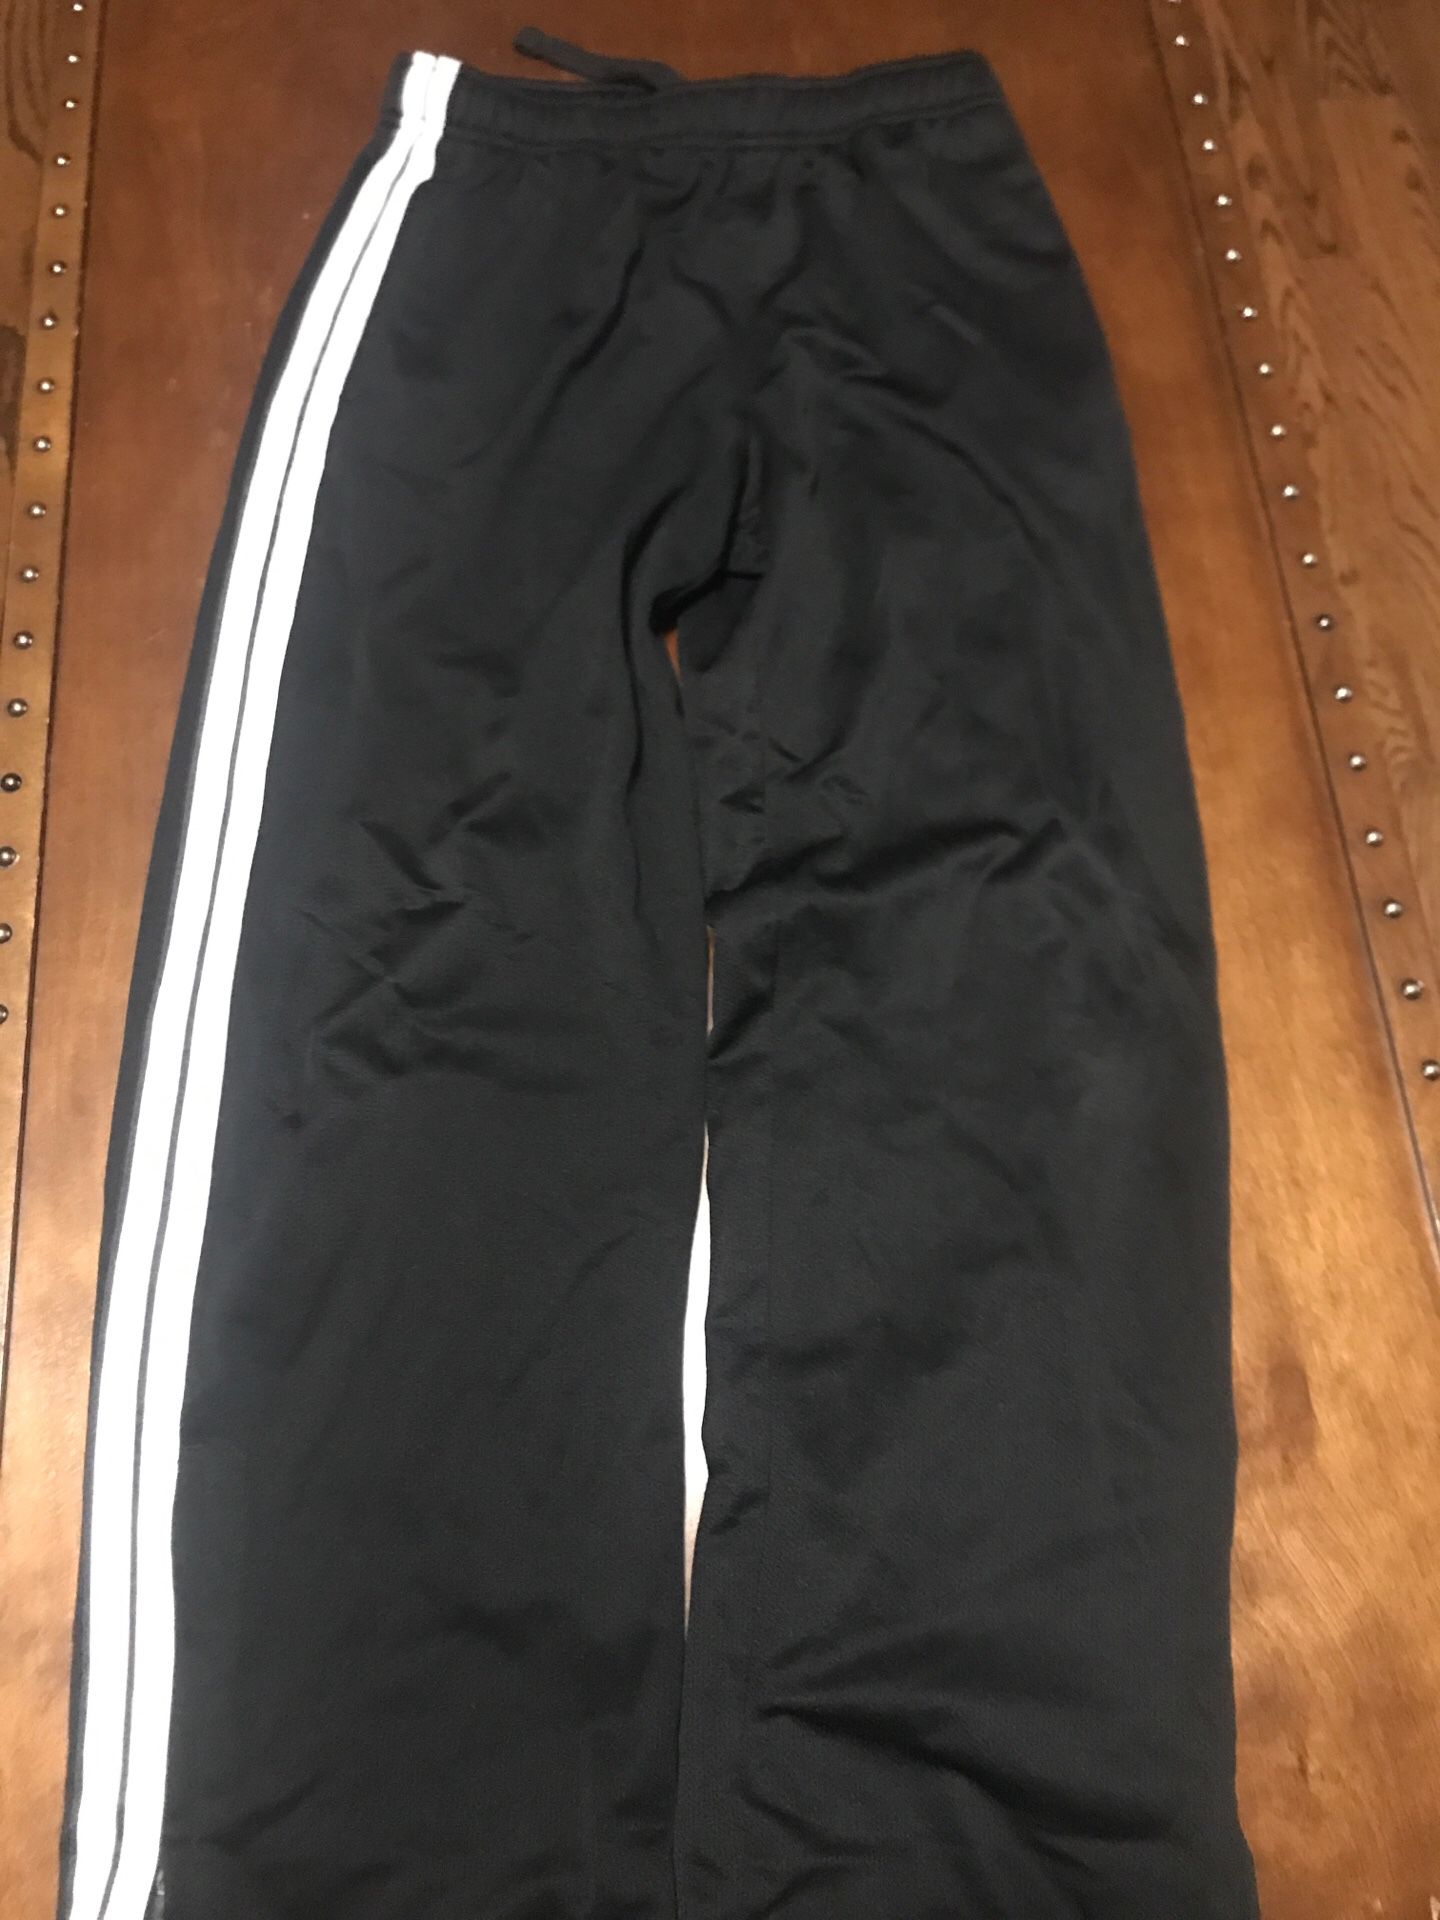 Boy’s Tek Gear size L 14-16 Dry Fit pants